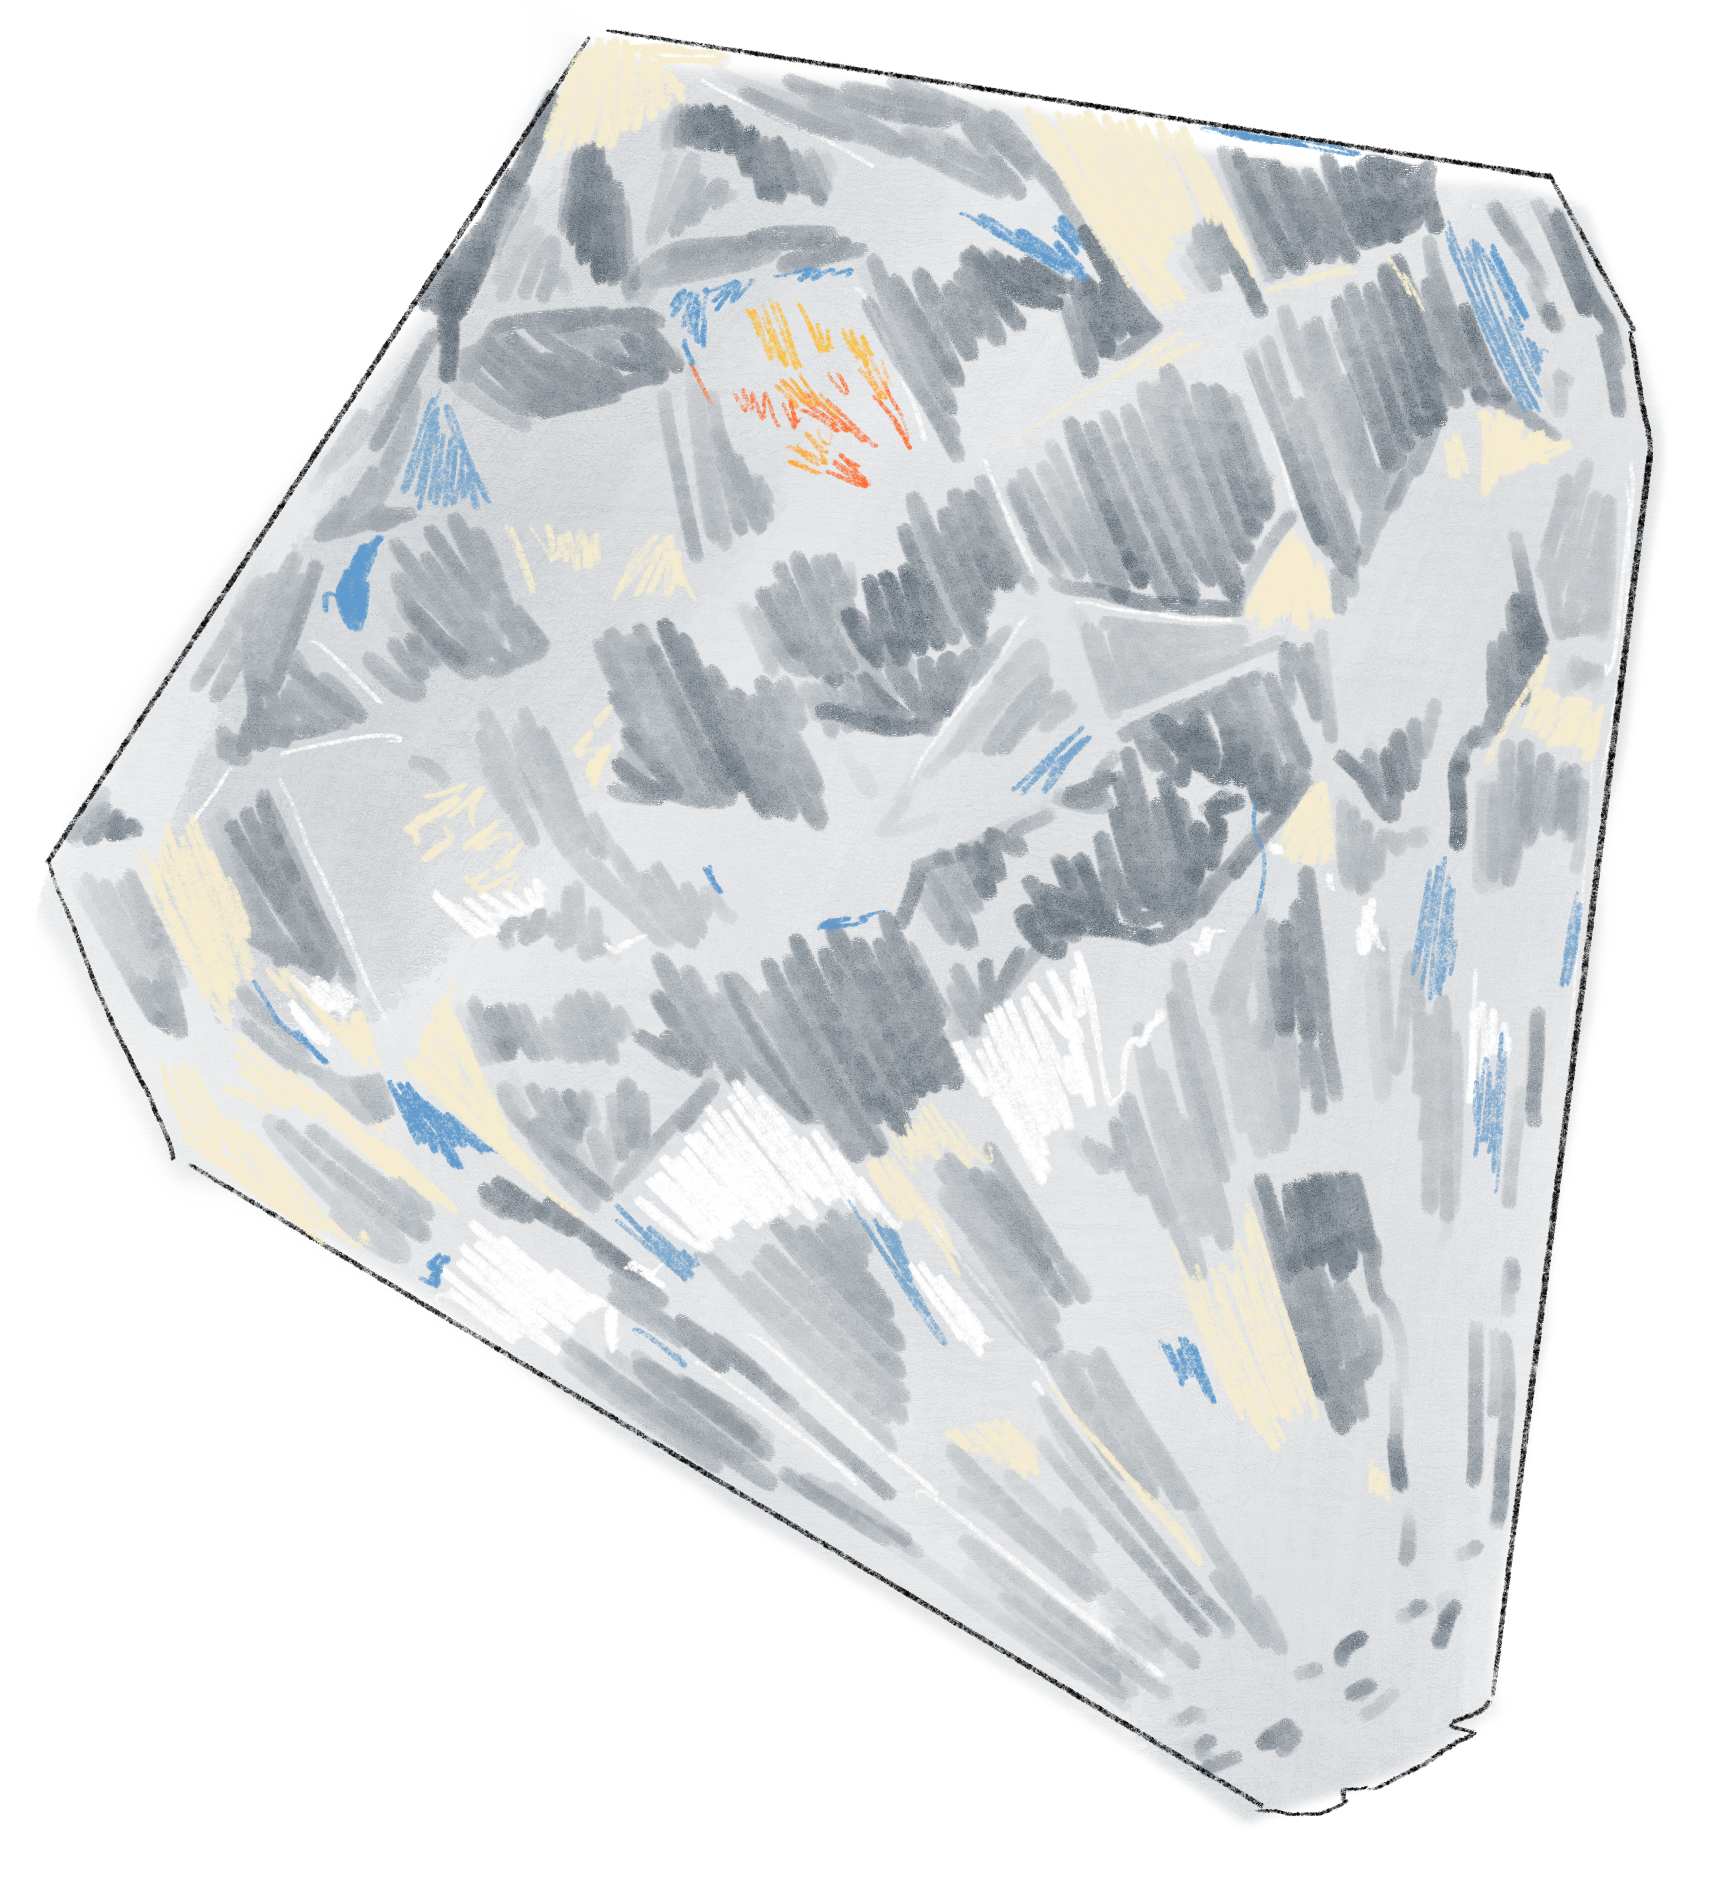 An illustration of a glass gem.